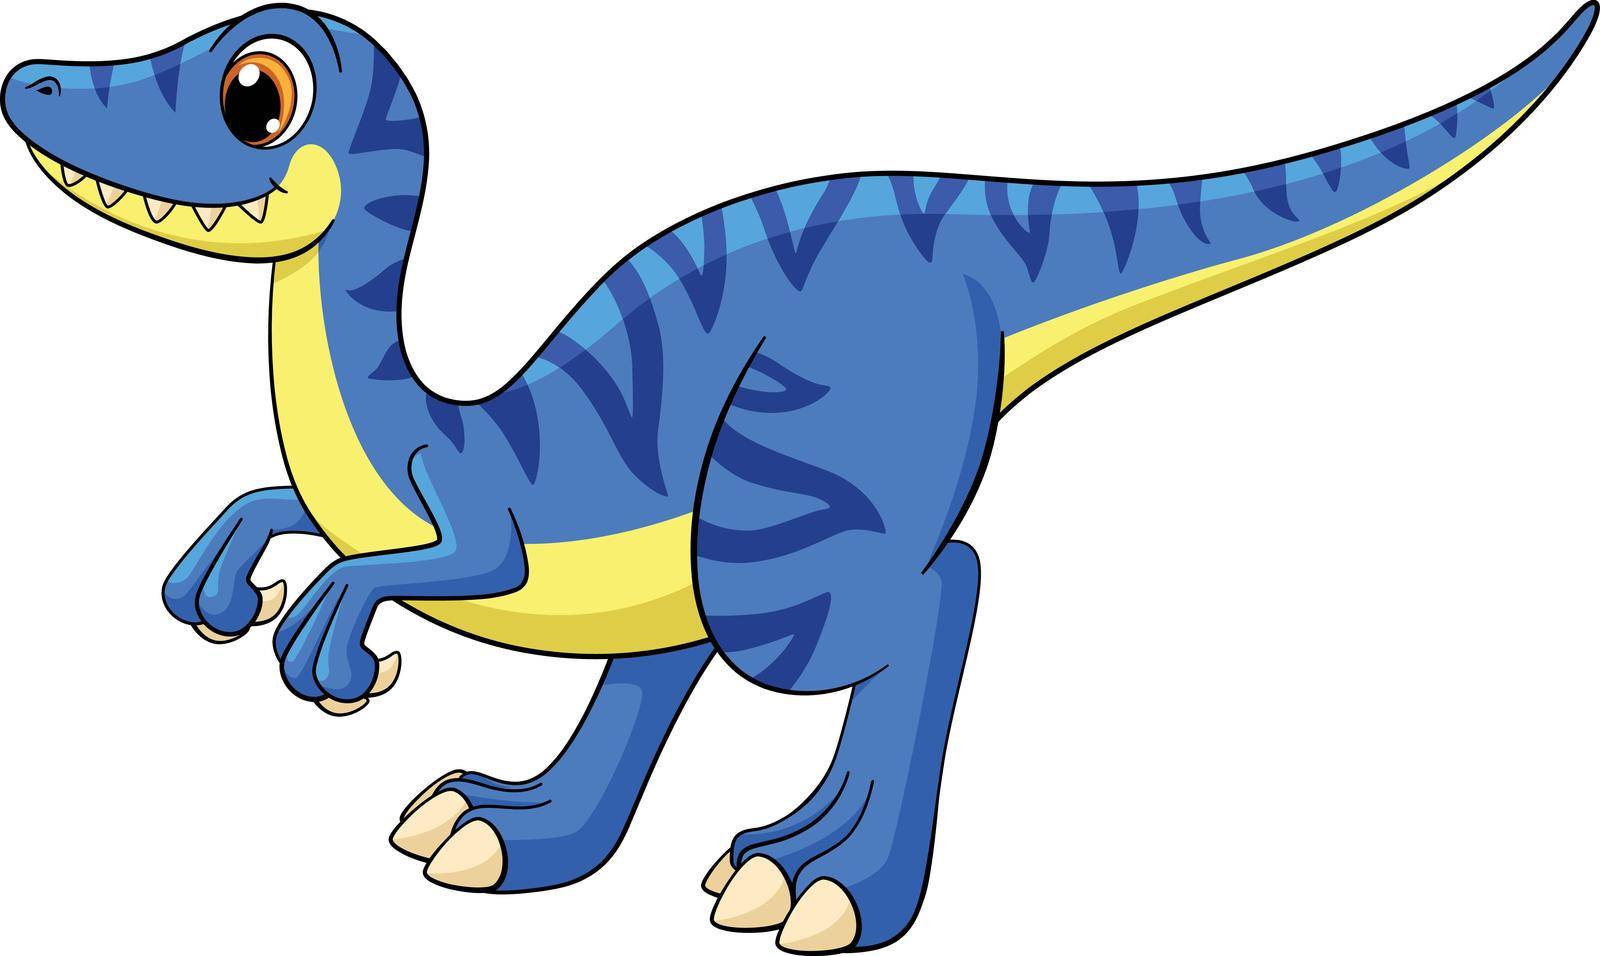 Baby raptor mascot. Cartoon blue velociraptor character by LadadikArt